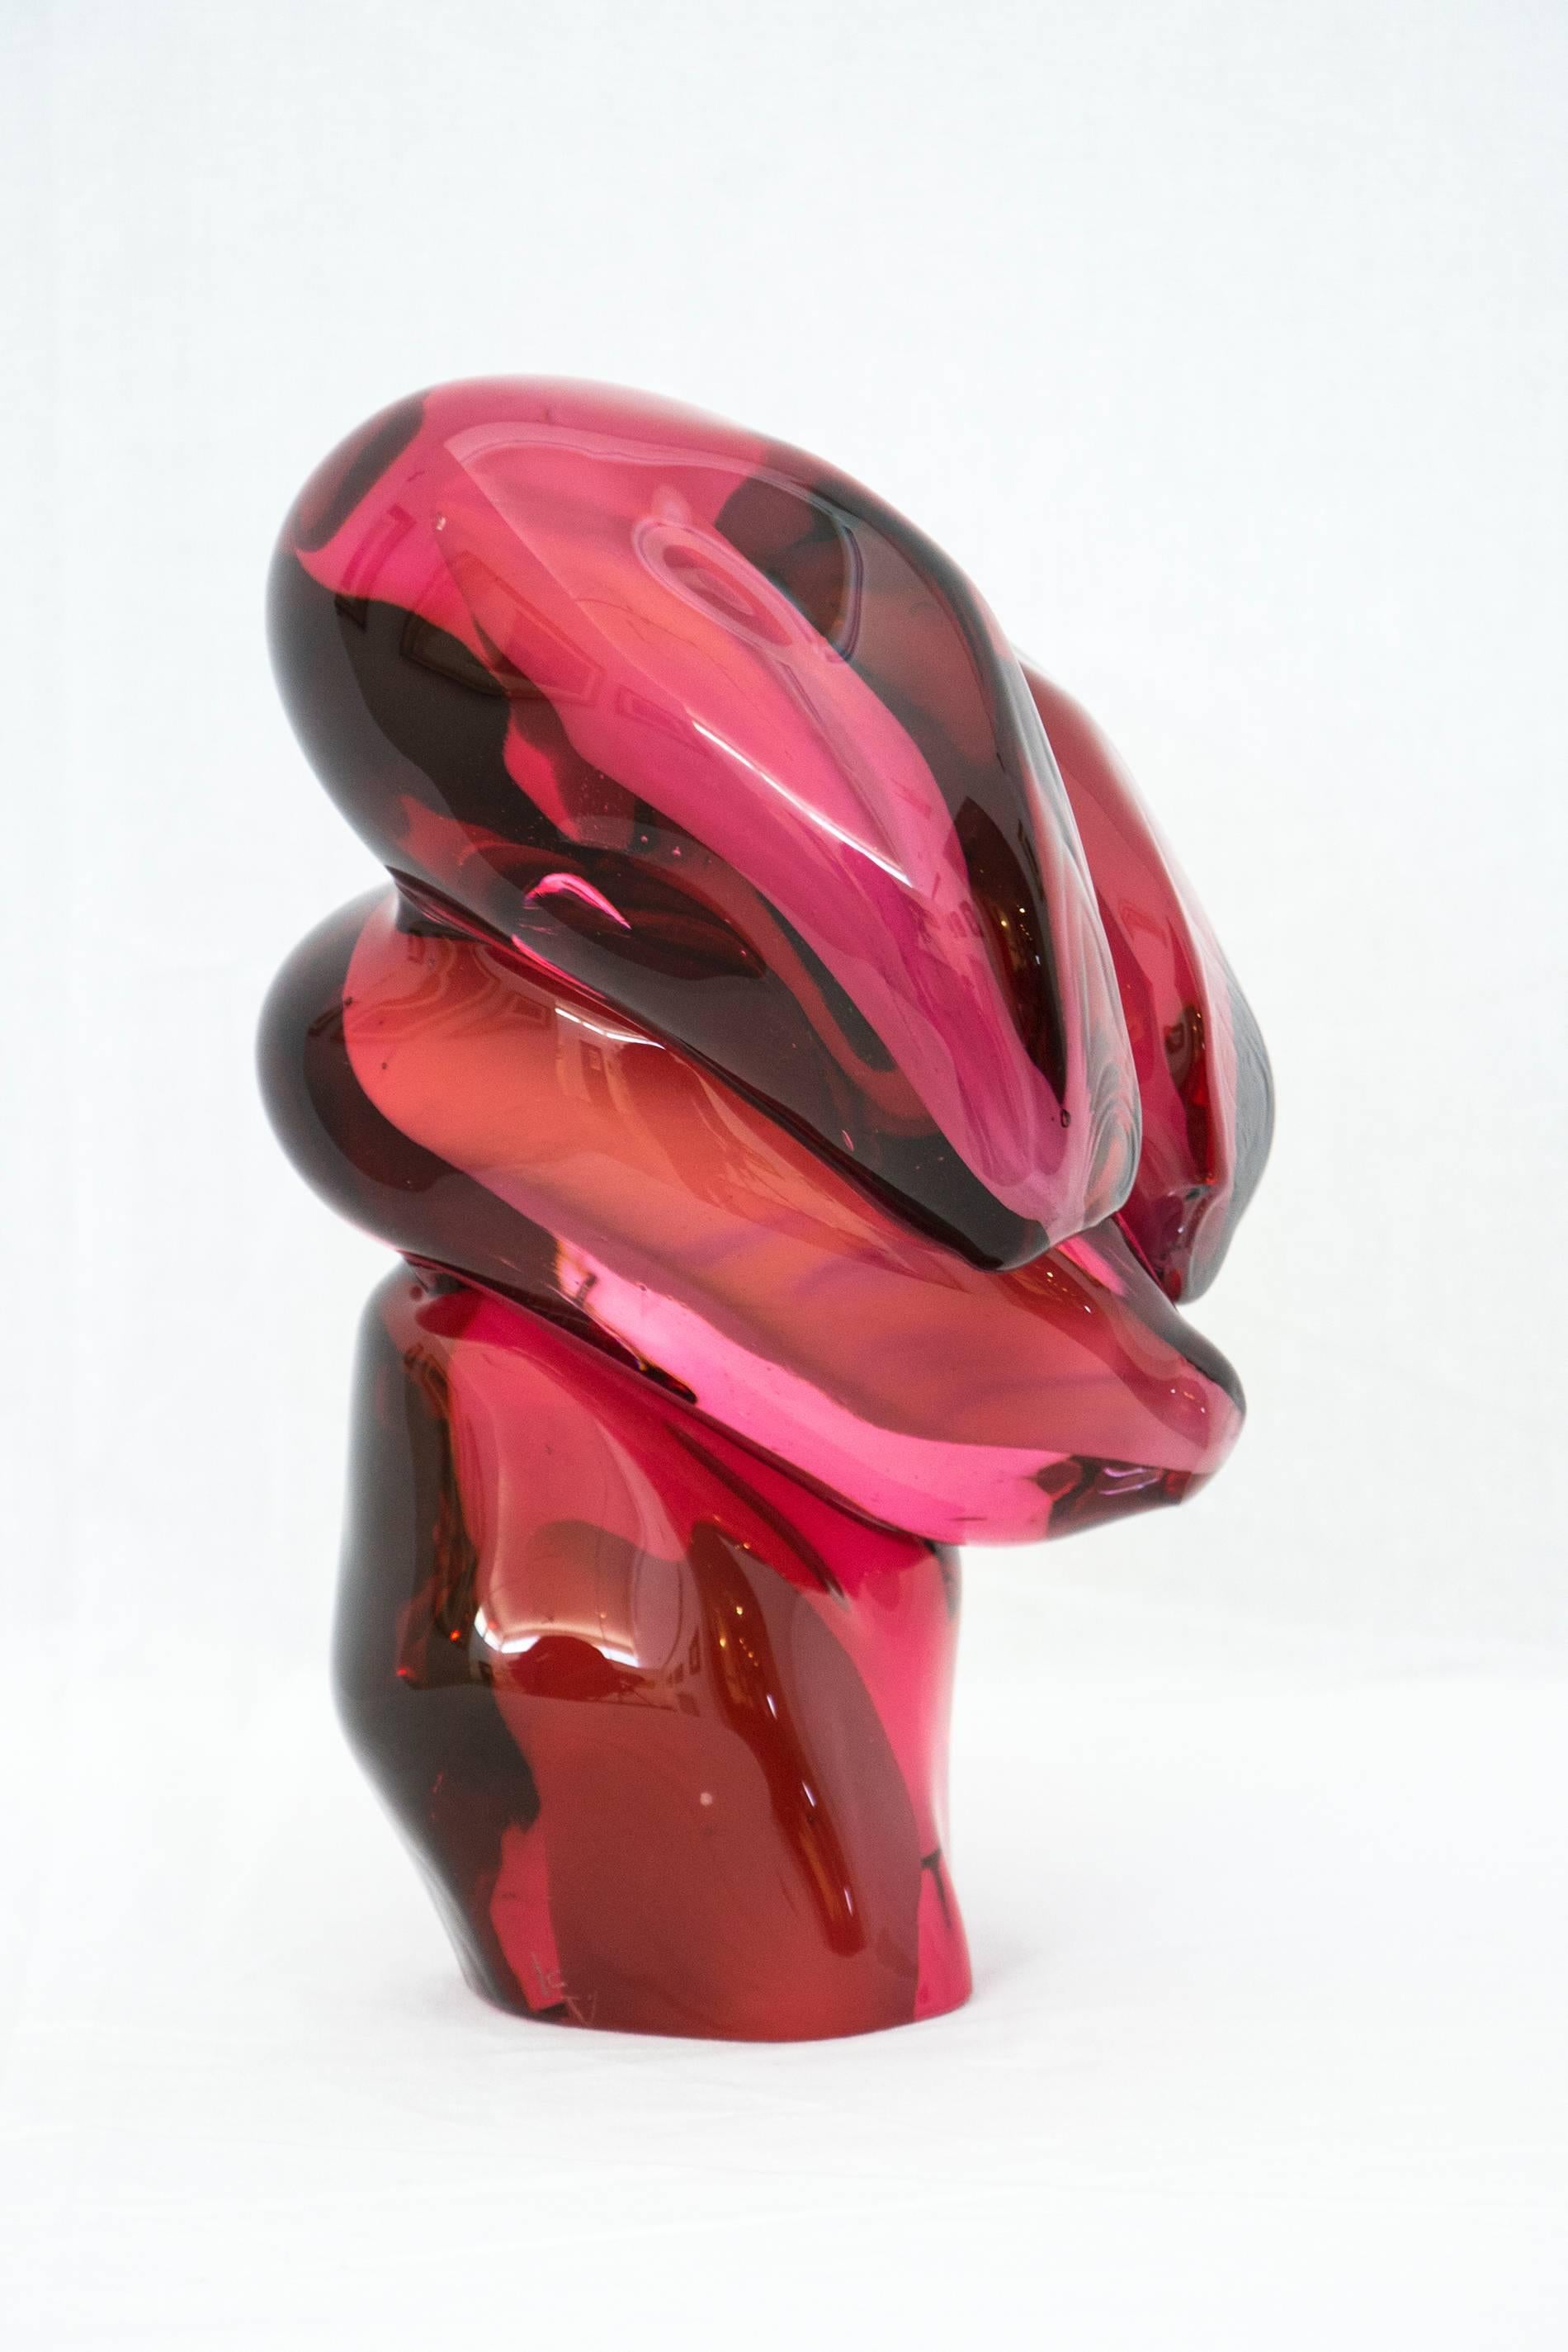 Catherine Vamvakas Lay Still-Life Sculpture - Pomegranate Seeds Raised